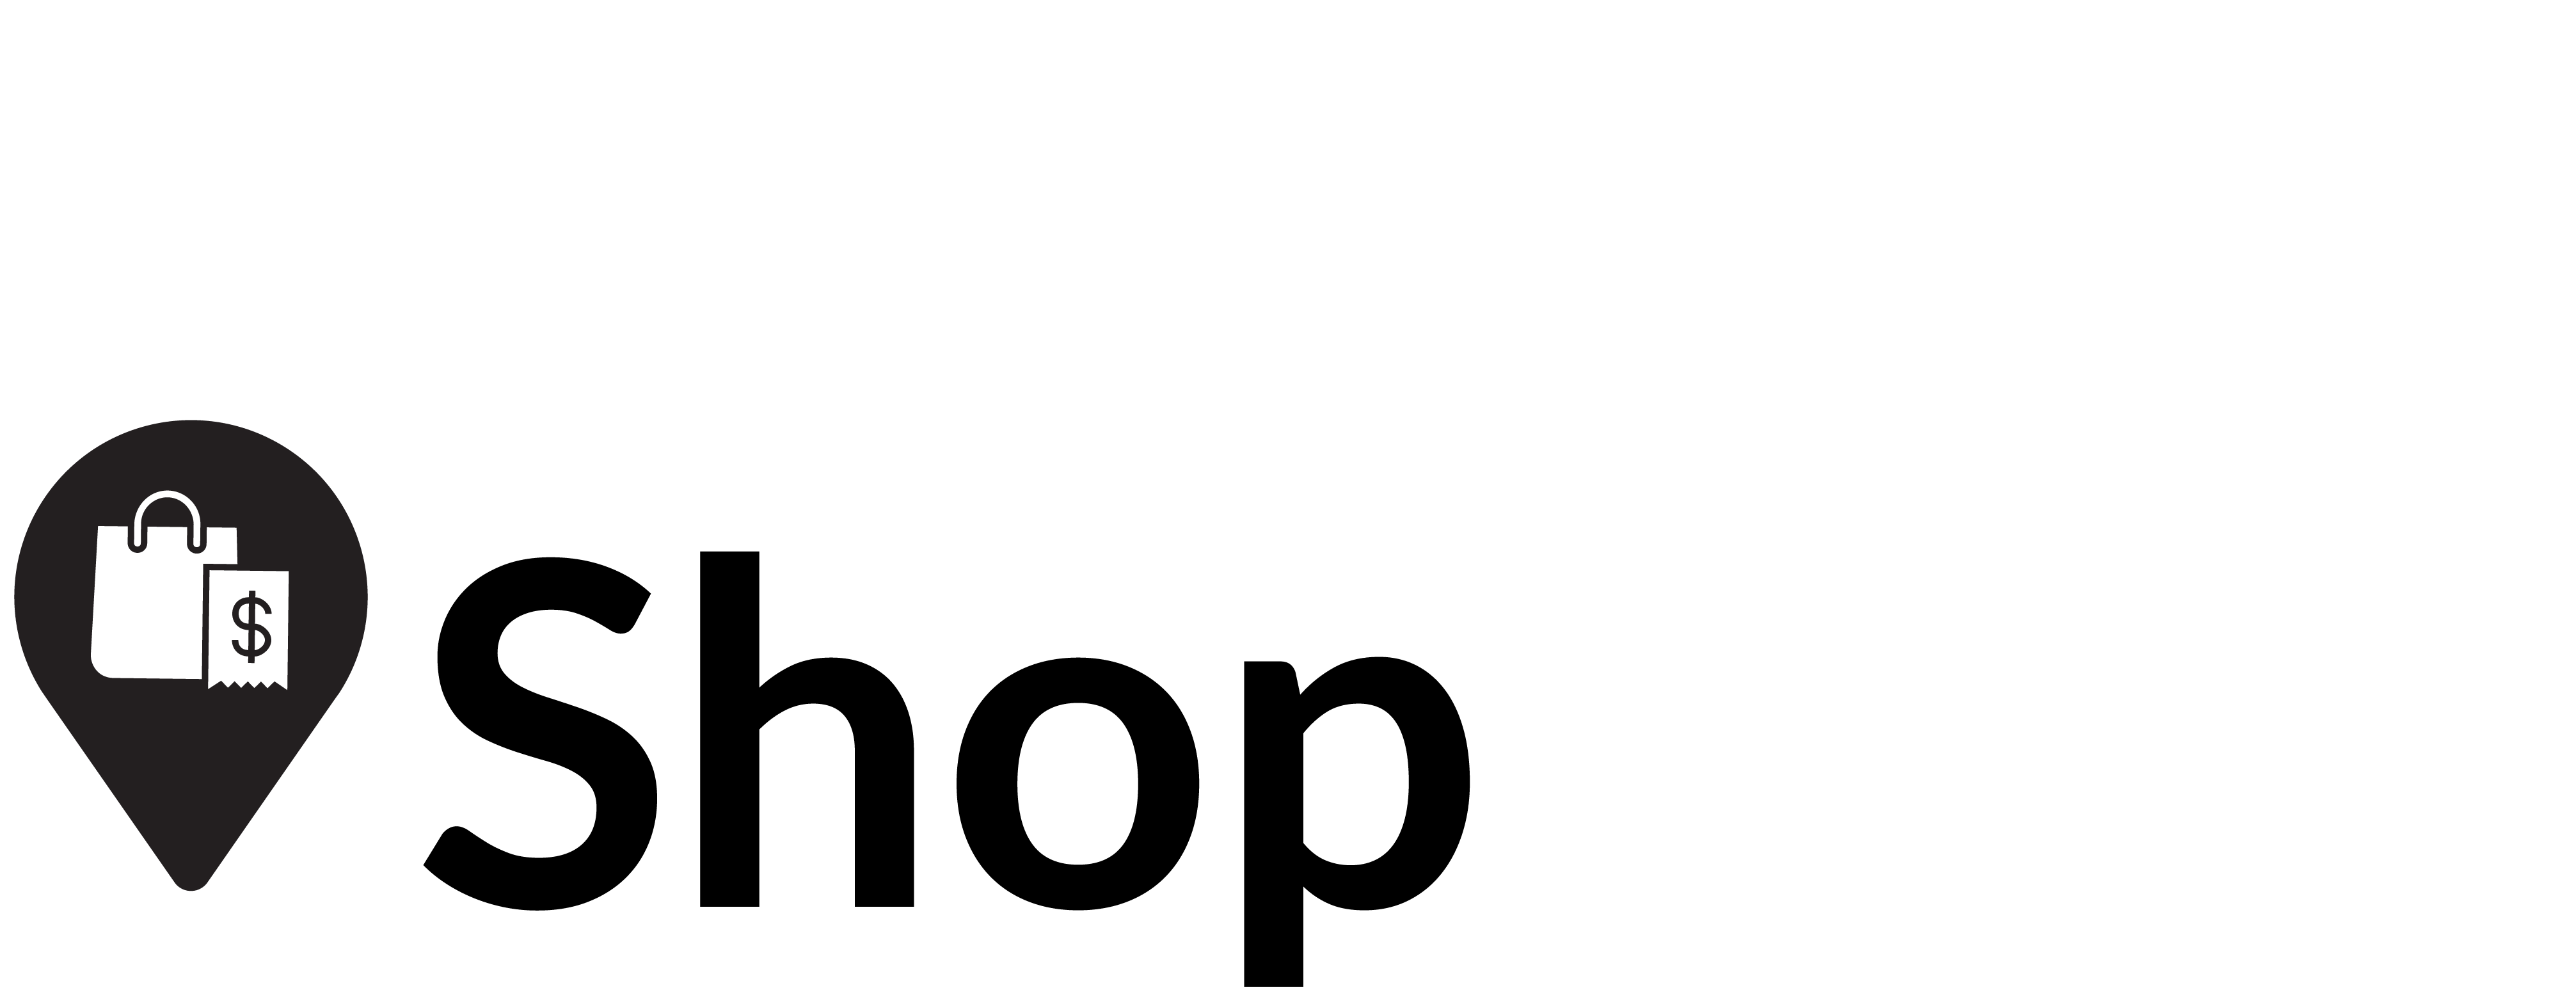 LetsLocalEyes-LogoSuite-Export-05